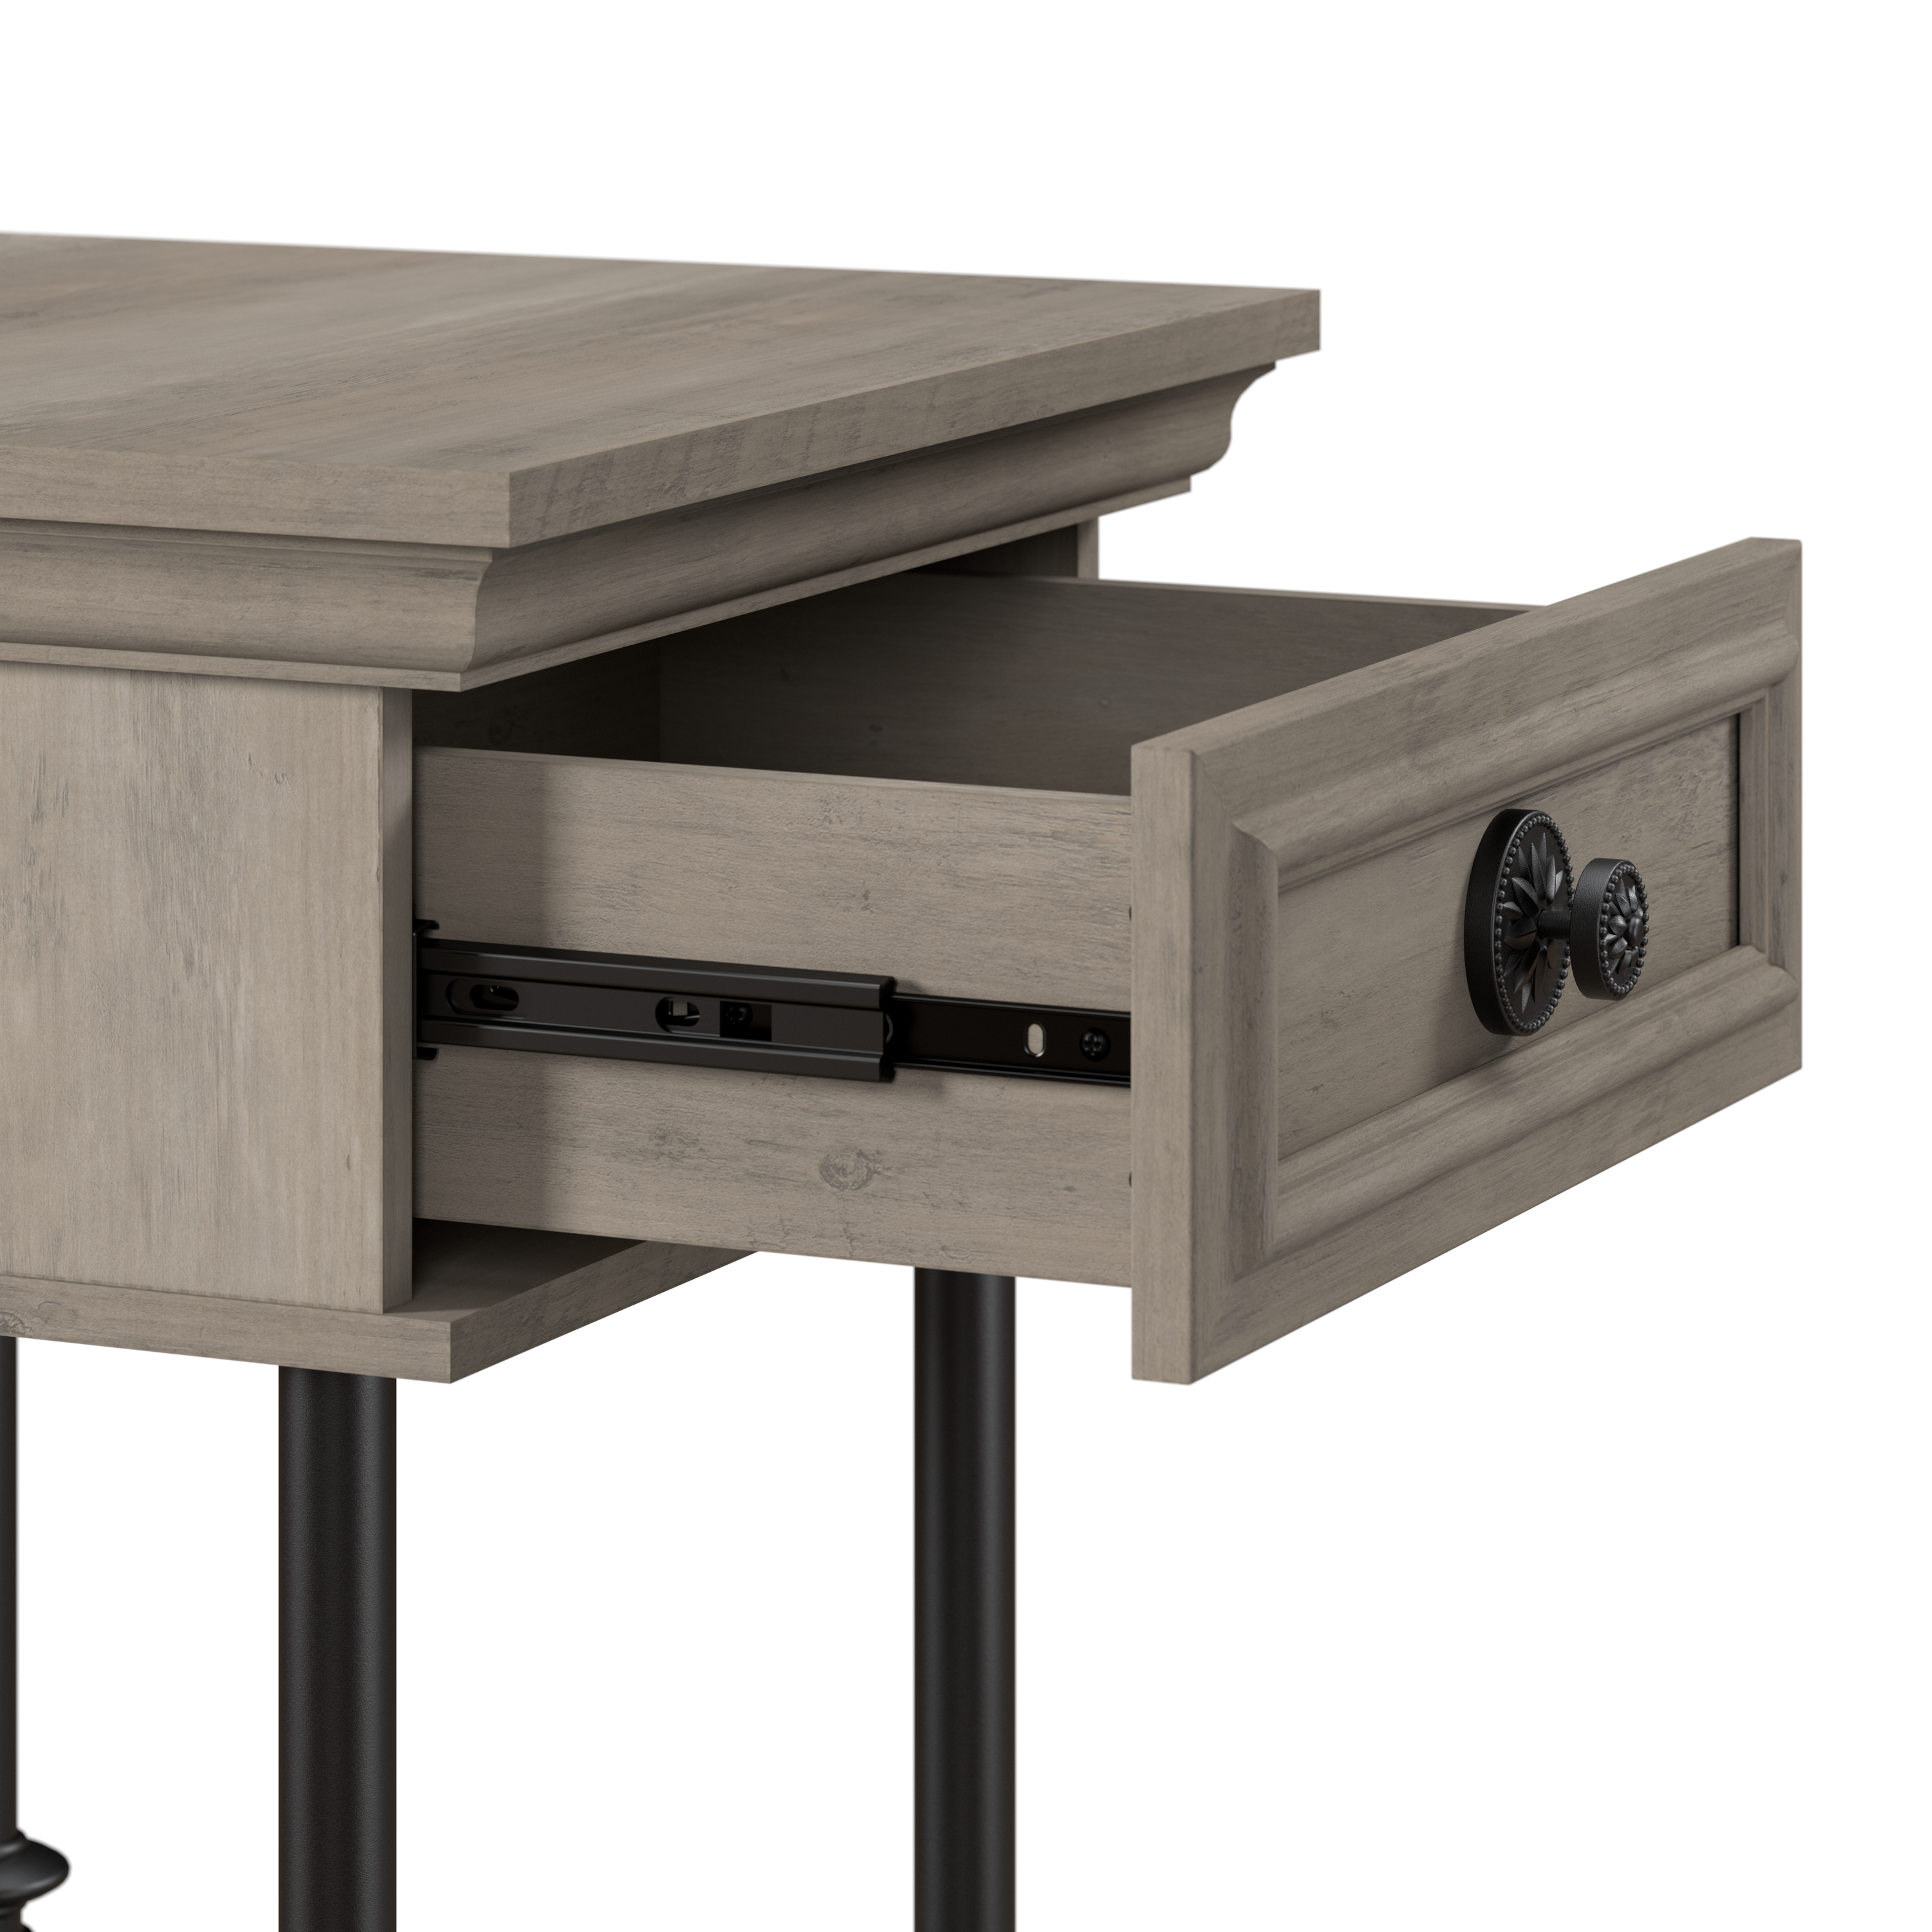 Shop Bush Furniture Coliseum Square Coffee Table with Designer End Tables 03 CSM006DG #color_driftwood gray